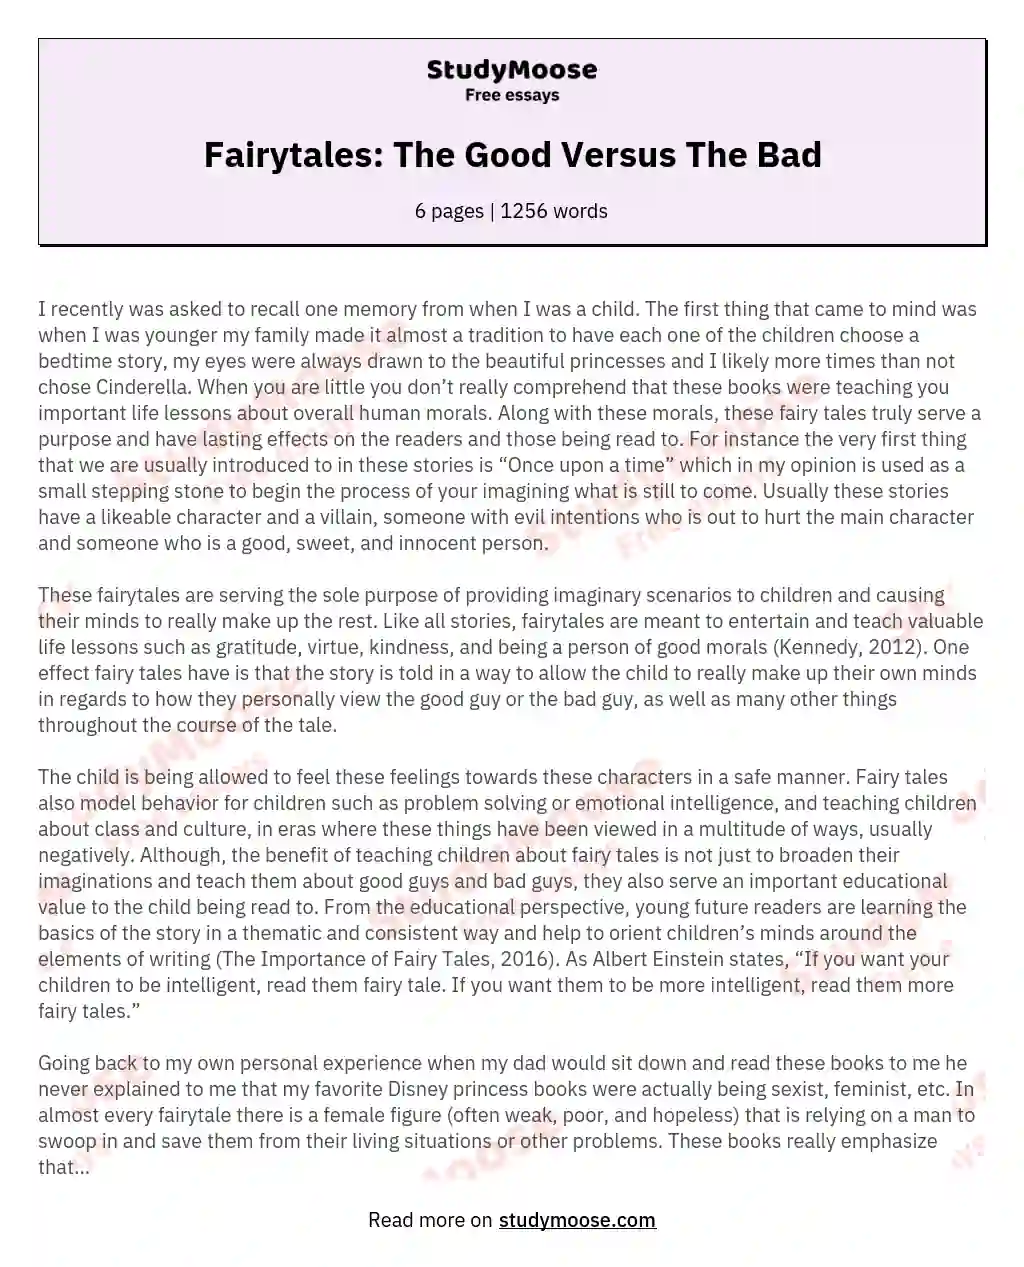 Fairytales: The Good Versus The Bad essay